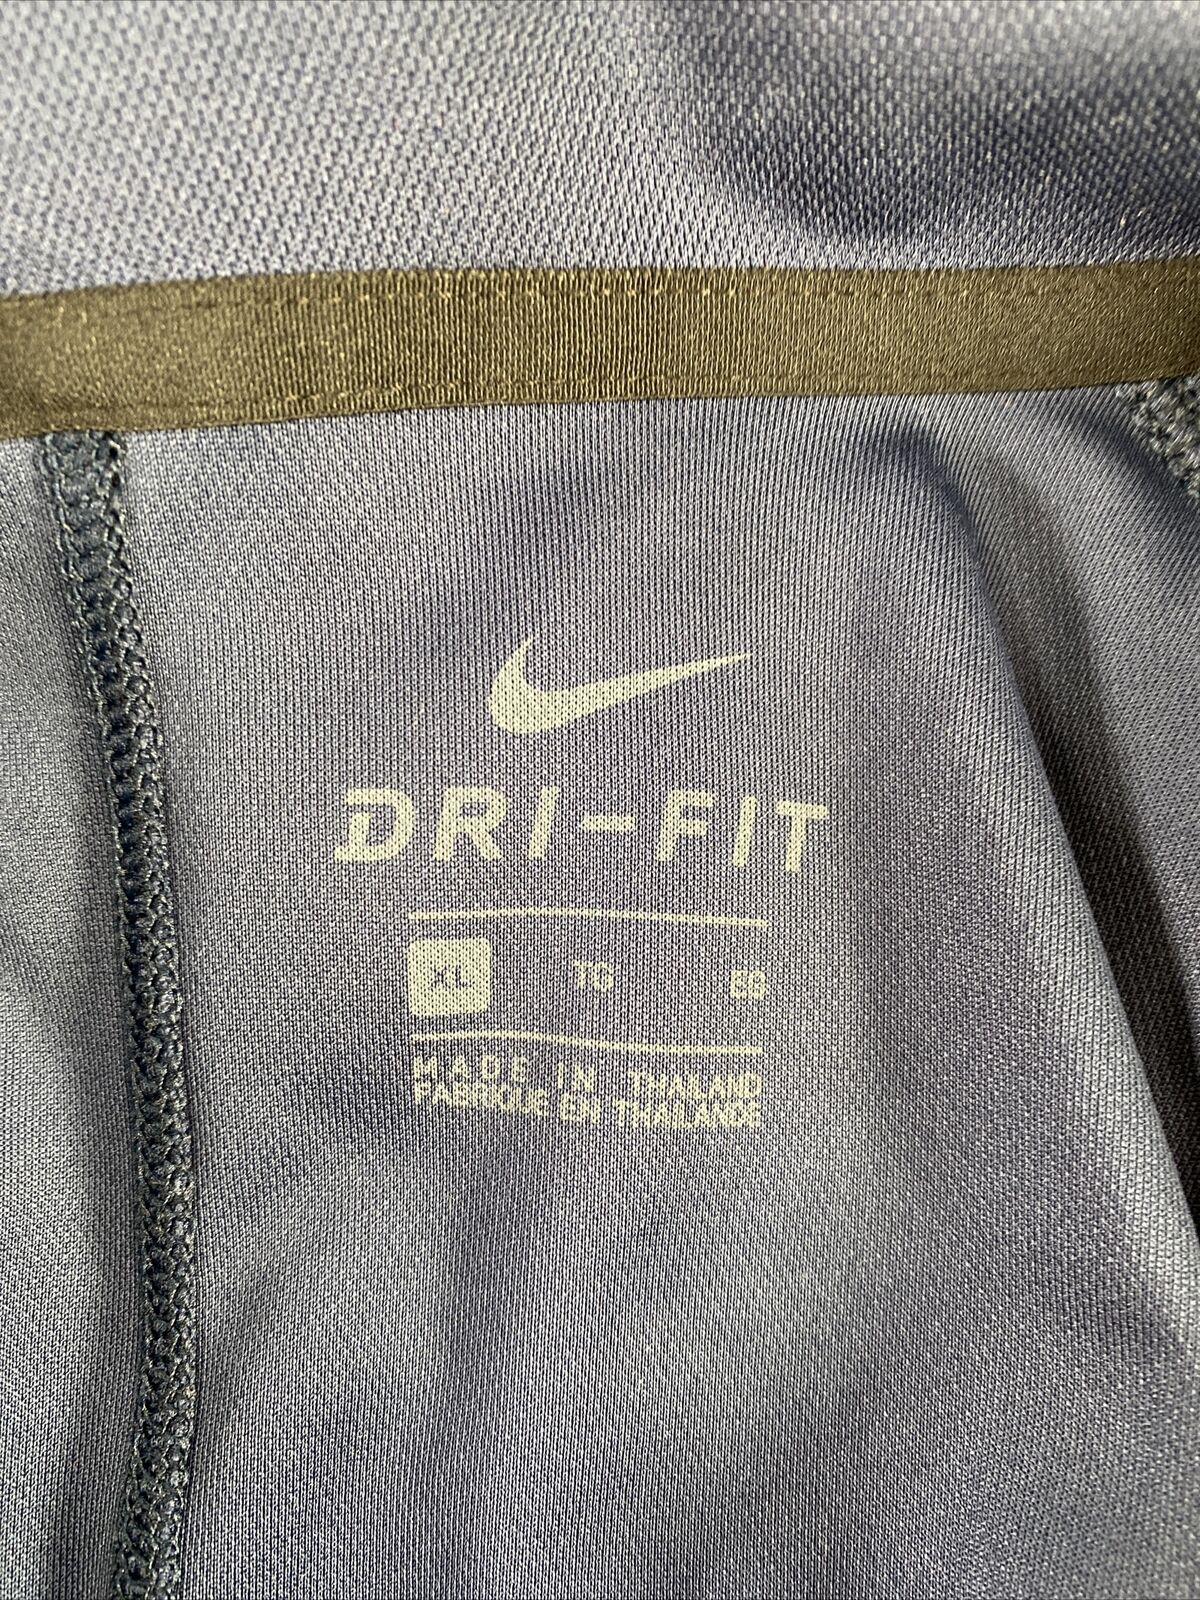 Nike Men's Blue Dri-Fit Short Sleeve Athletic Polo Shirt - XL